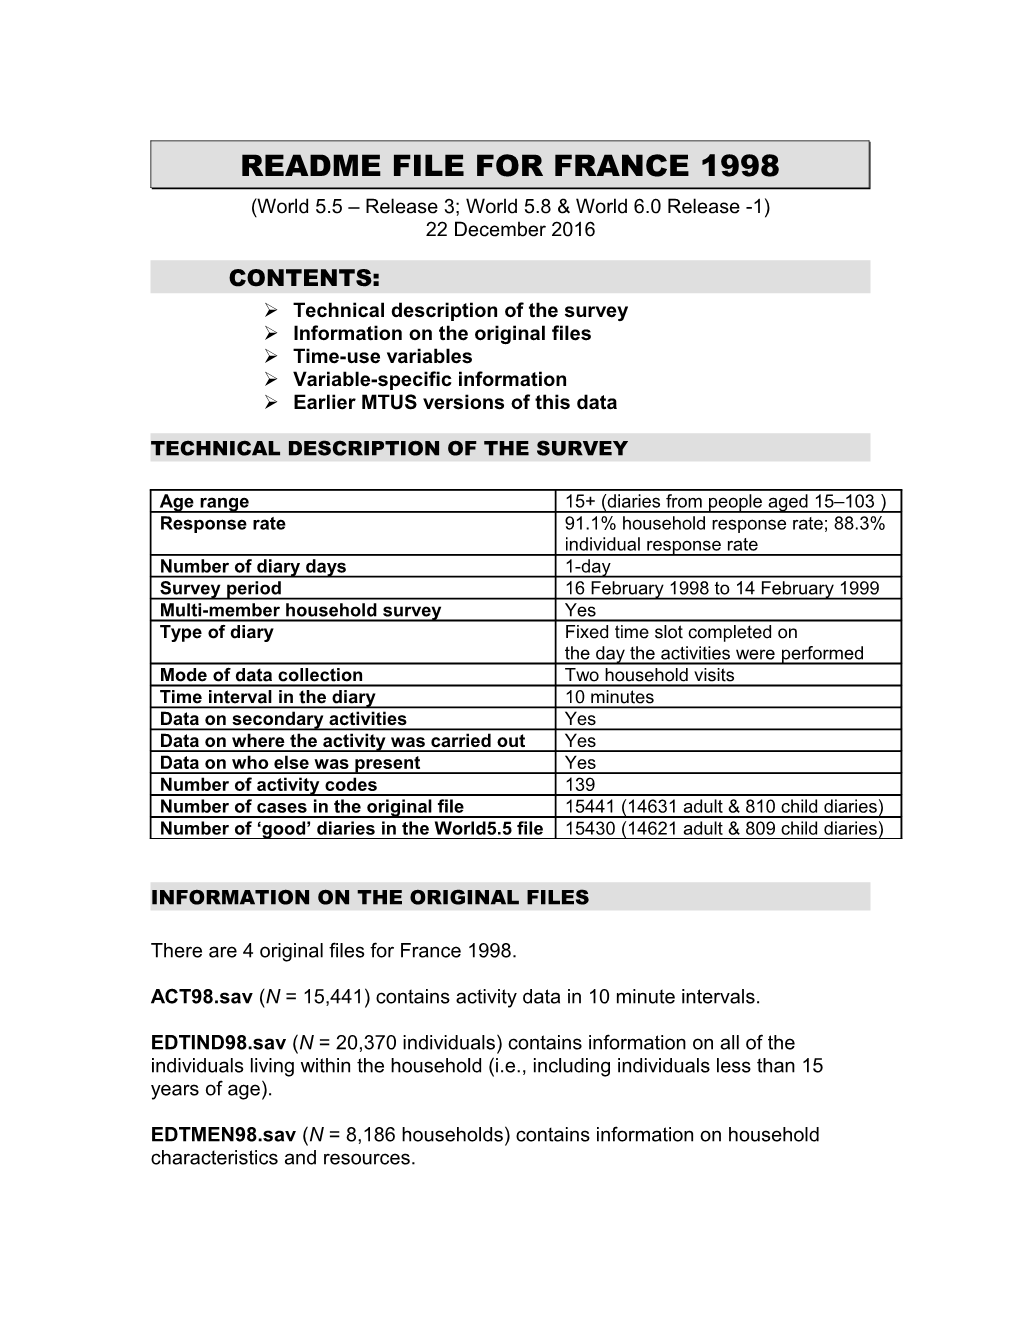 Readme File for France 1998